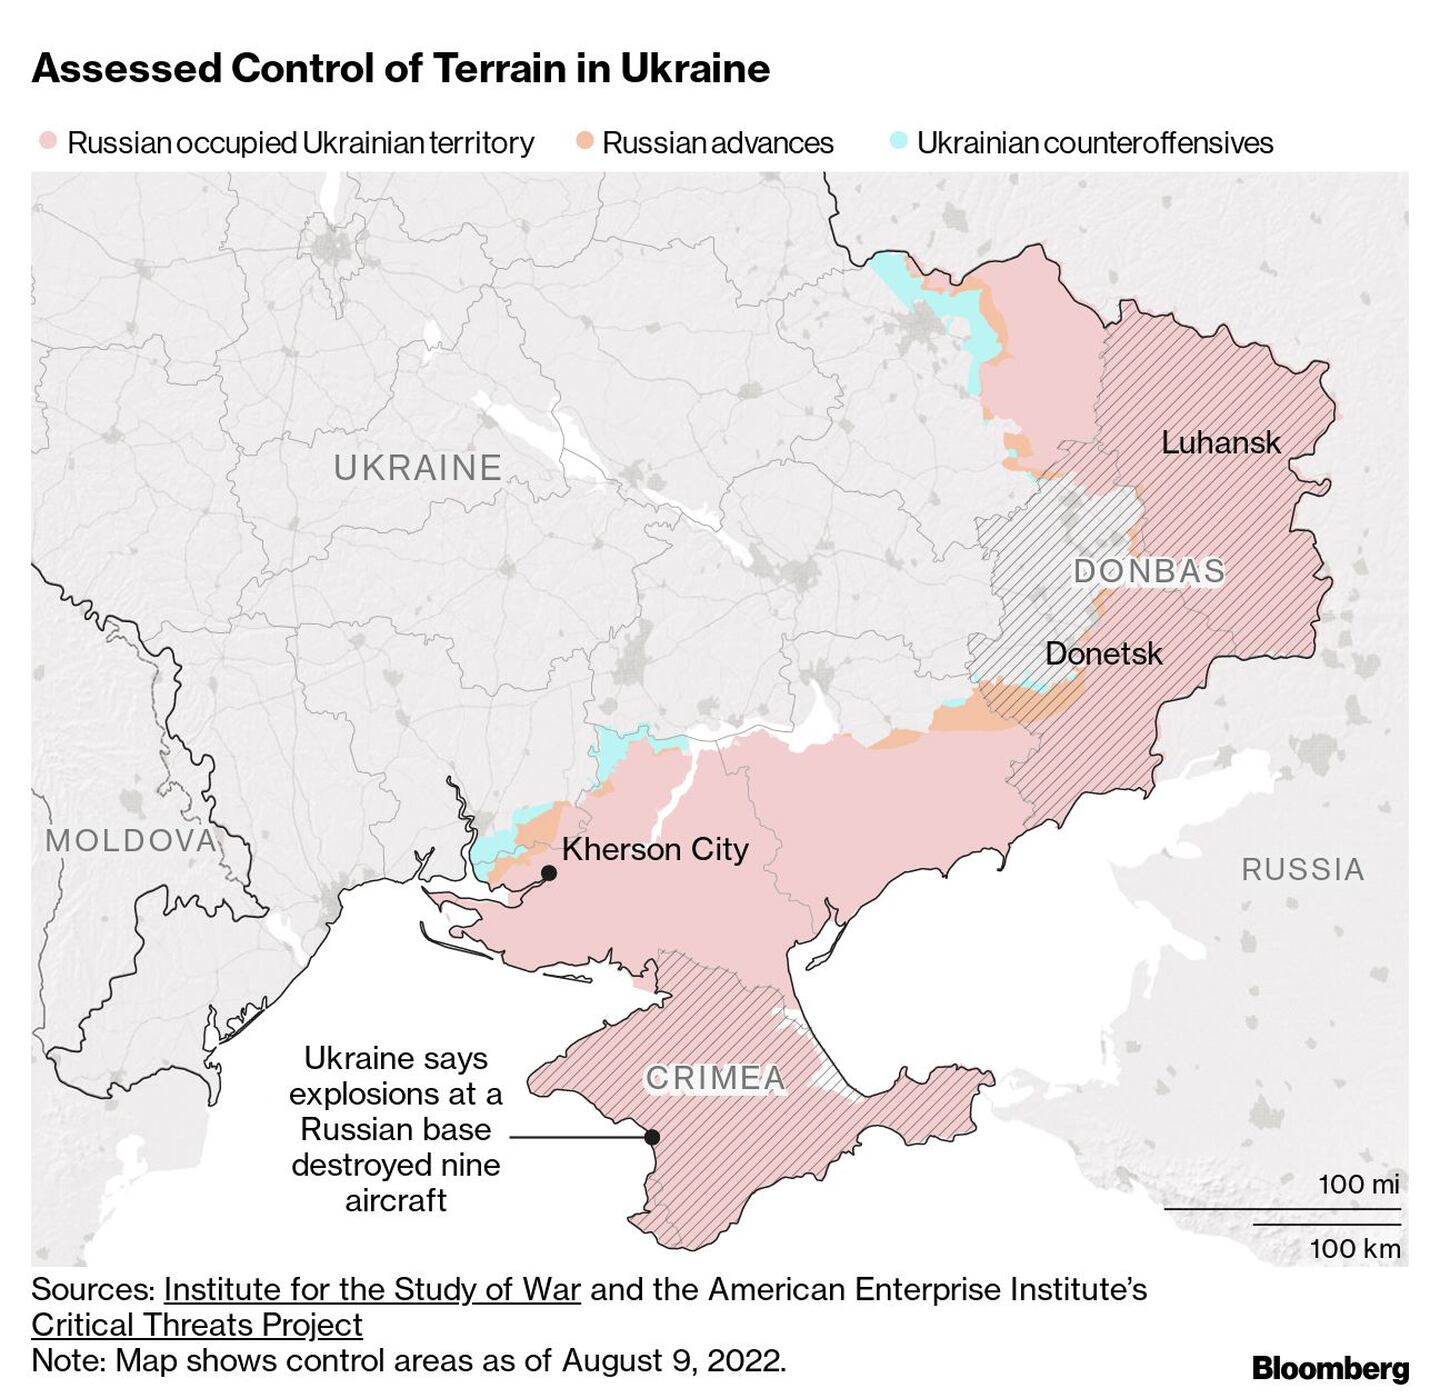 En rosa claro: Territorio ocupado por Rusia
En rosa oscuro: Avances rusos
En celeste: Contraofensivas ucranianasdfd